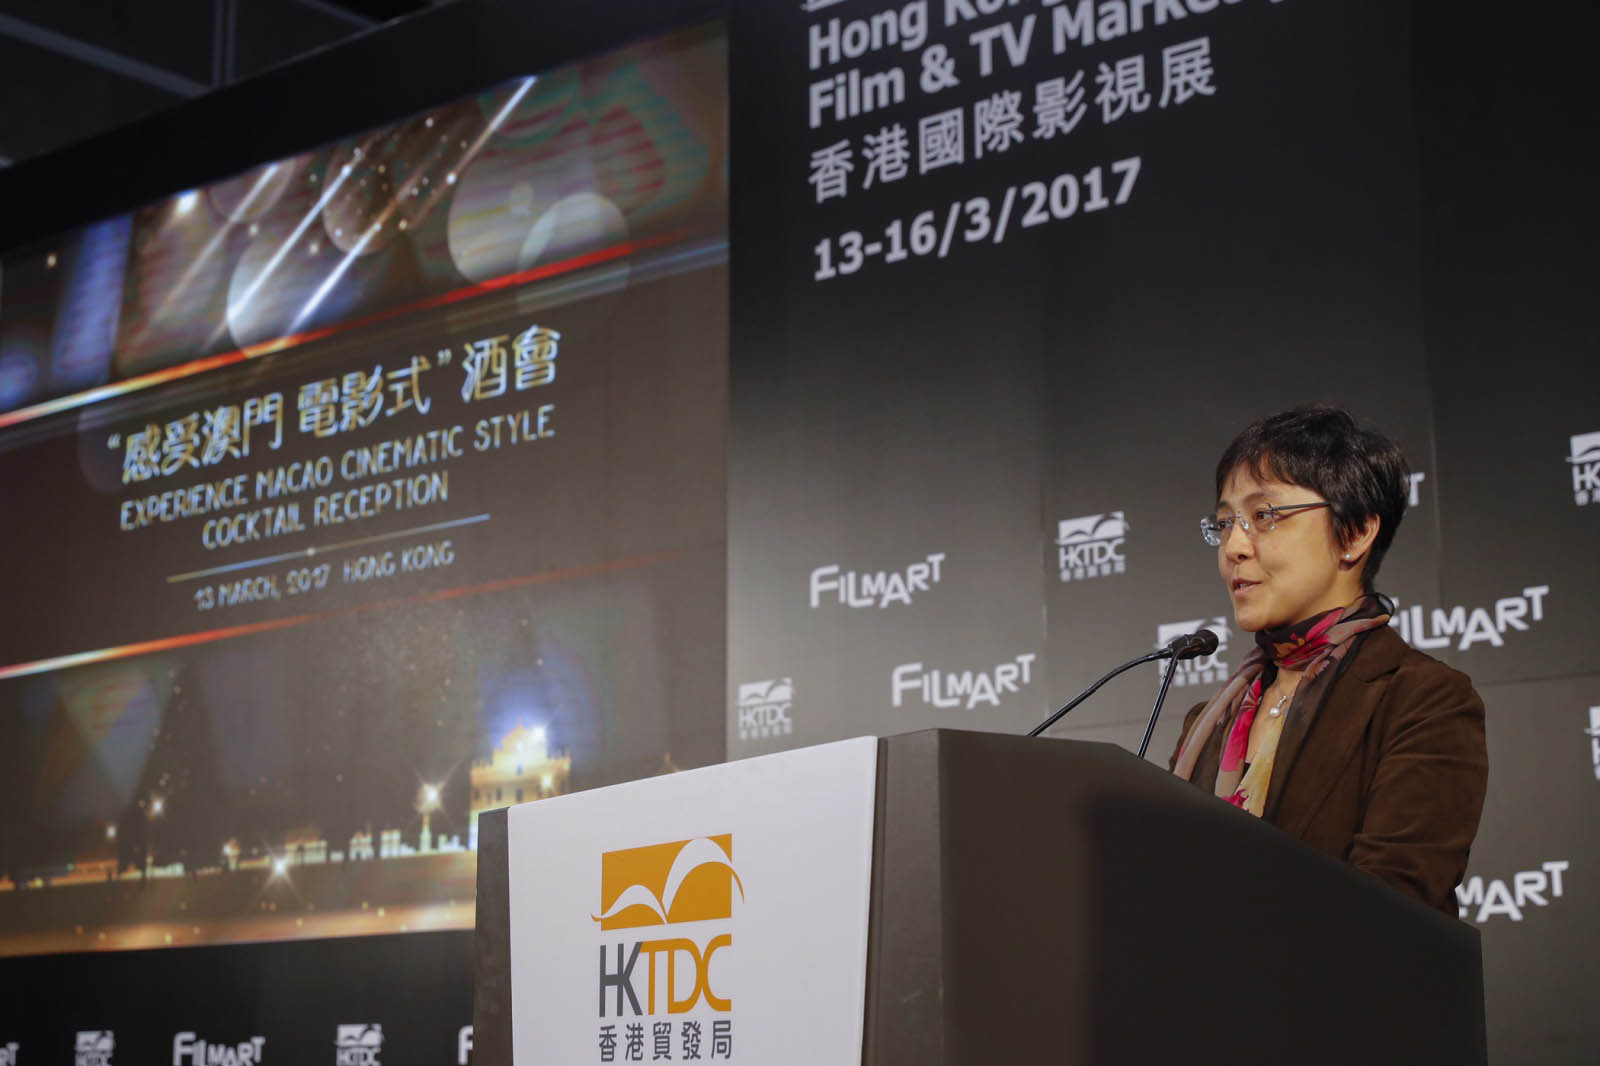 Hong Kong | Macau tenta atrair indústria do cinema